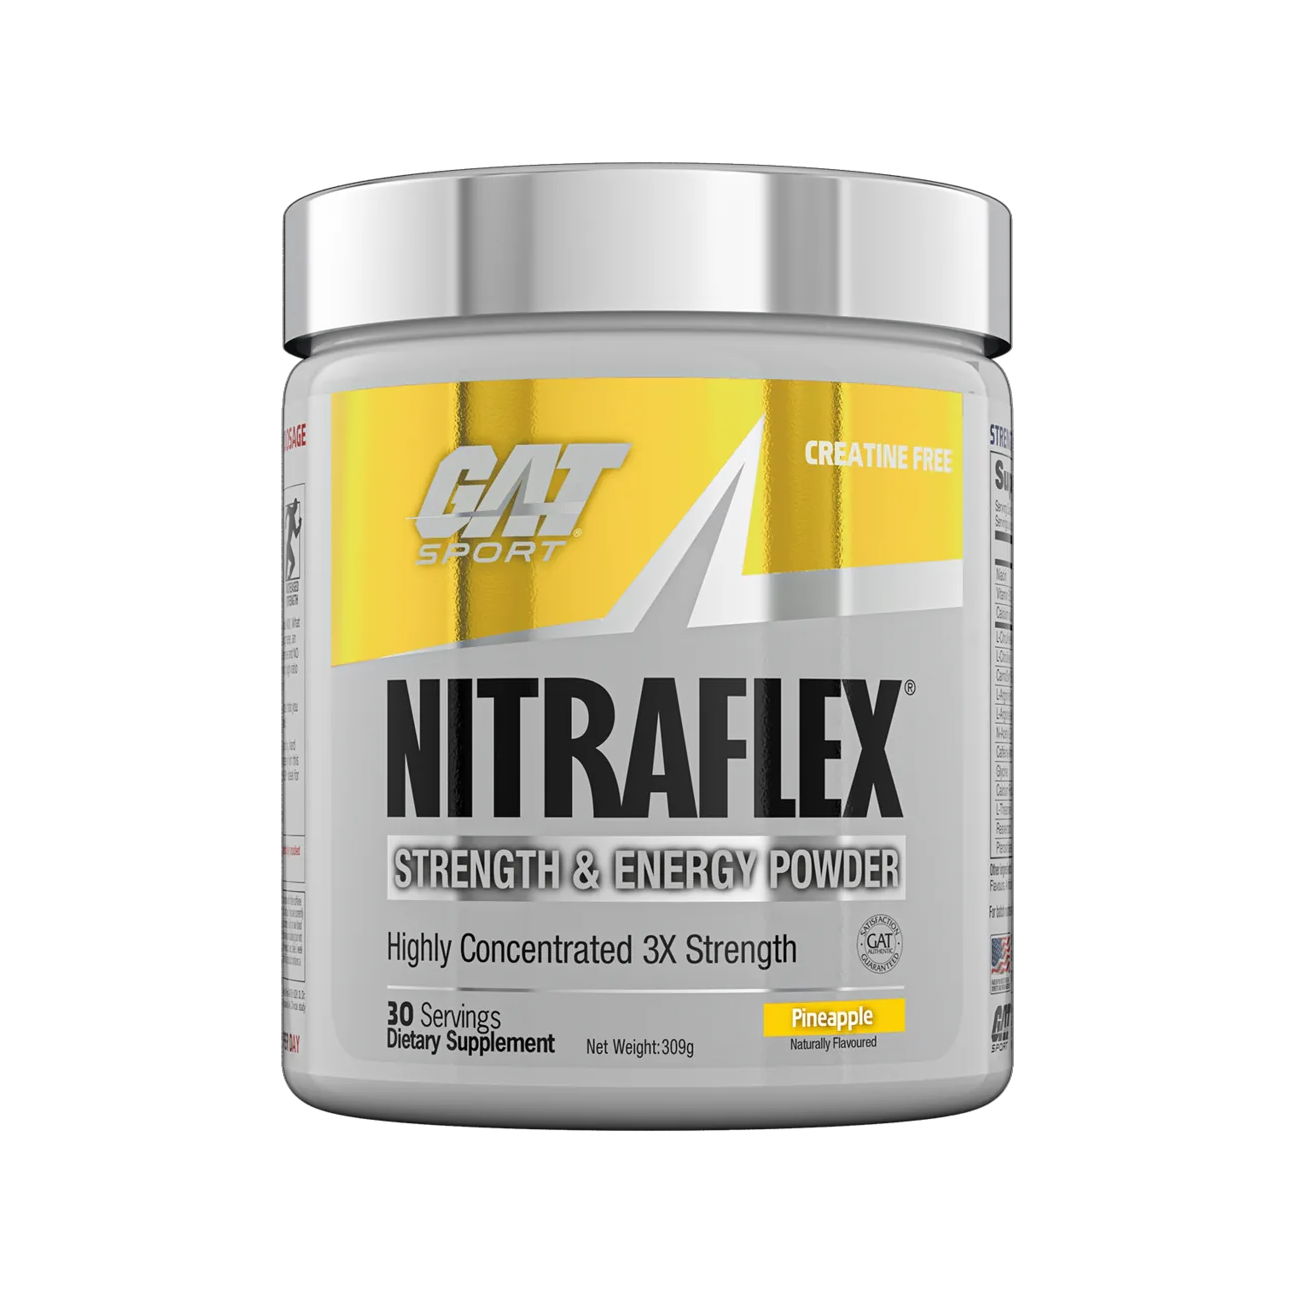 GAT Sport Nitraflex Pre-Workout 30 Serves, Pineapple